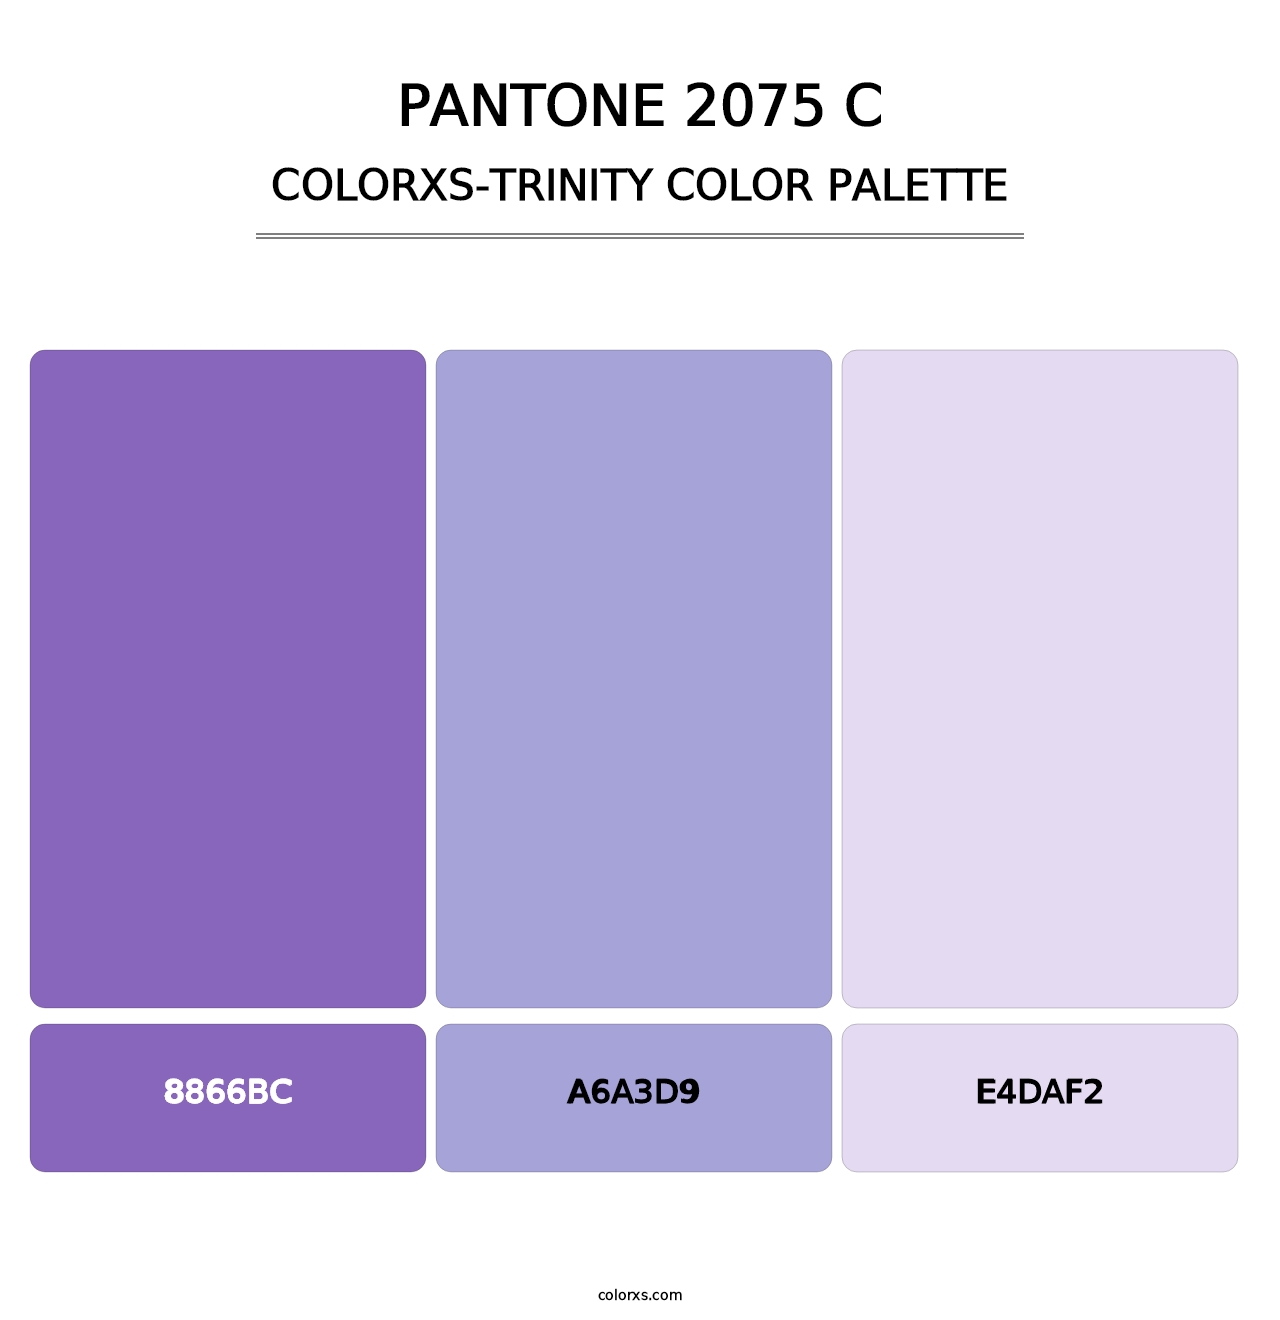 PANTONE 2075 C - Colorxs Trinity Palette